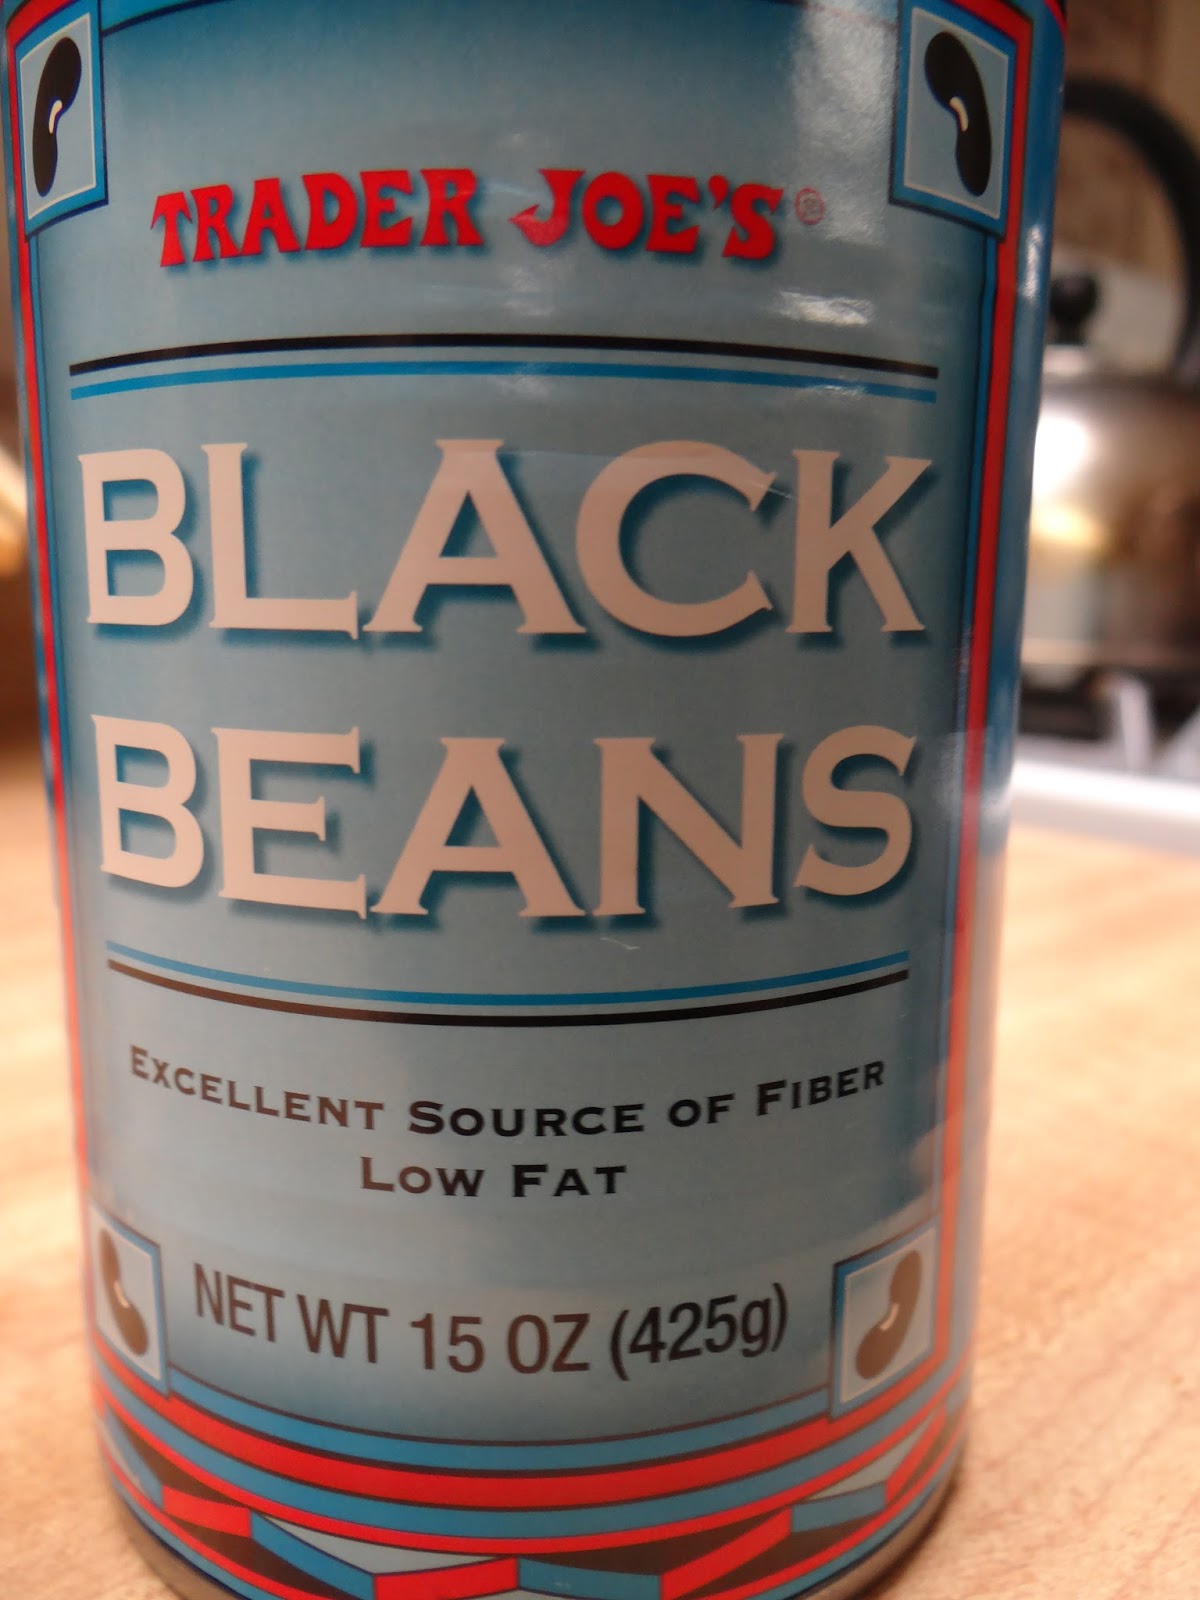 Trader Joe's 365: Black Beans - even CHEAPER than before!